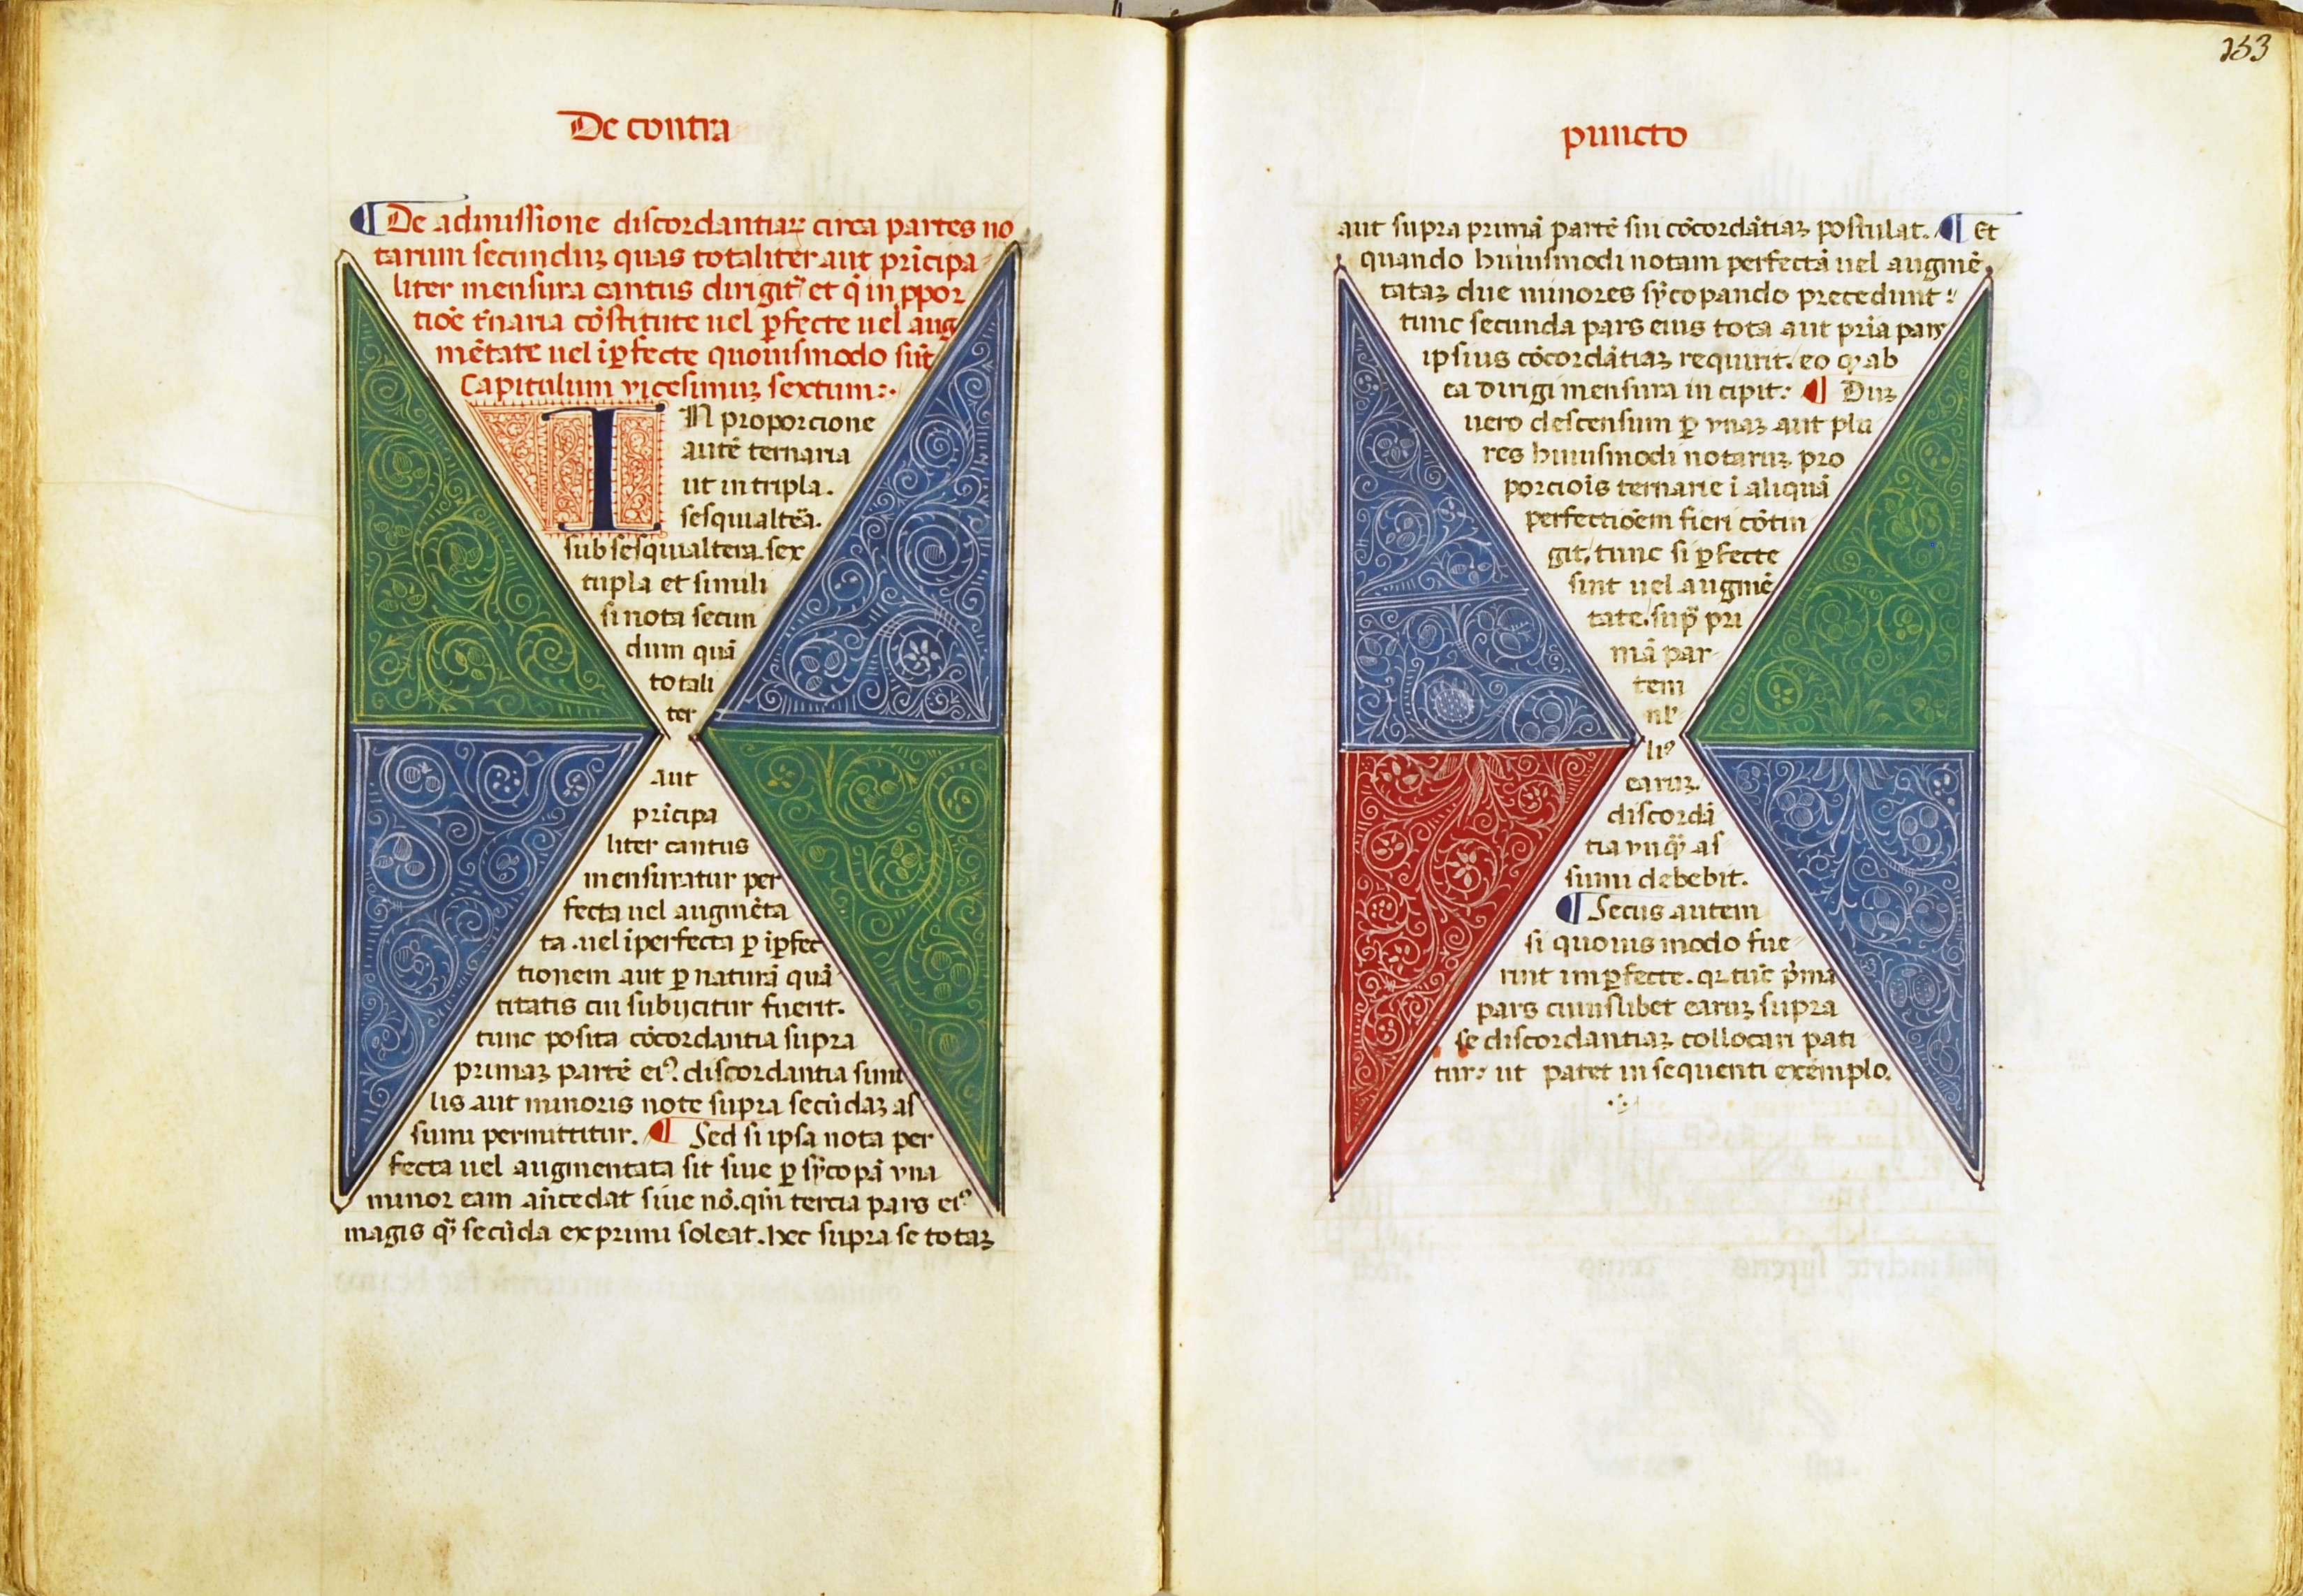 Bologna, Biblioteca Universitaria, MS 2573, fols. 152v–153r. Source: Biblioteca Universitaria, Bologna.